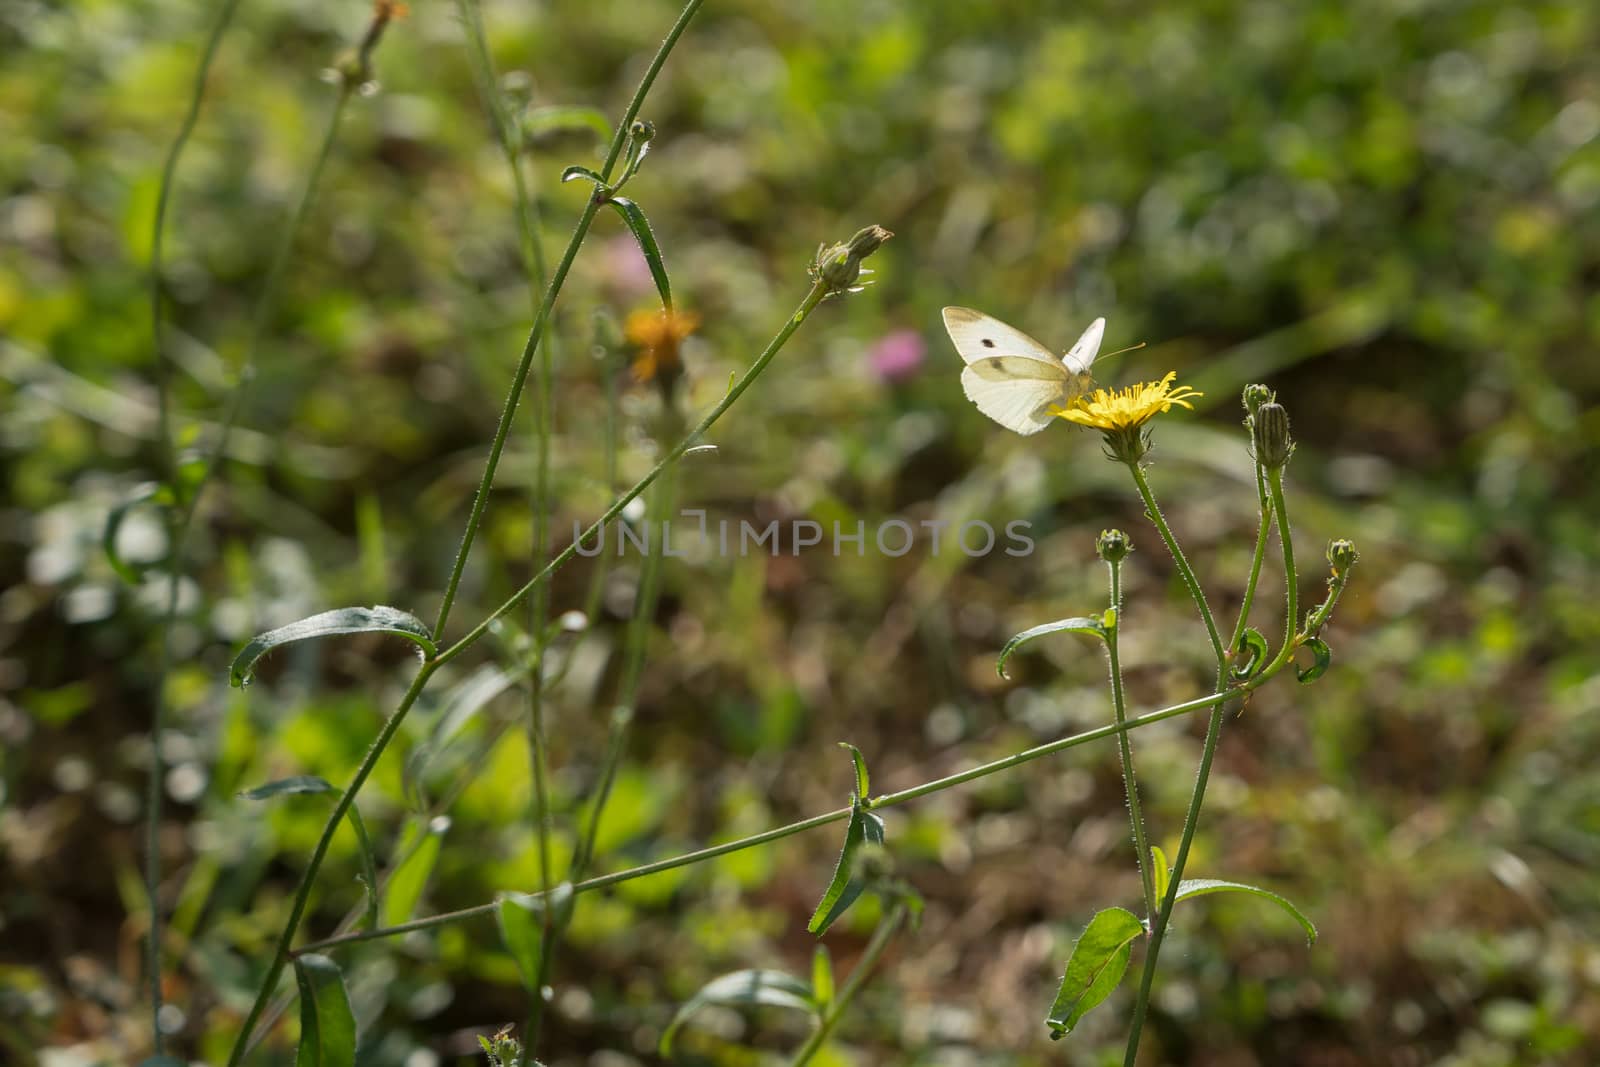 Southern Small White
(pieris mannii) Butterfly in Sigishoura Romania